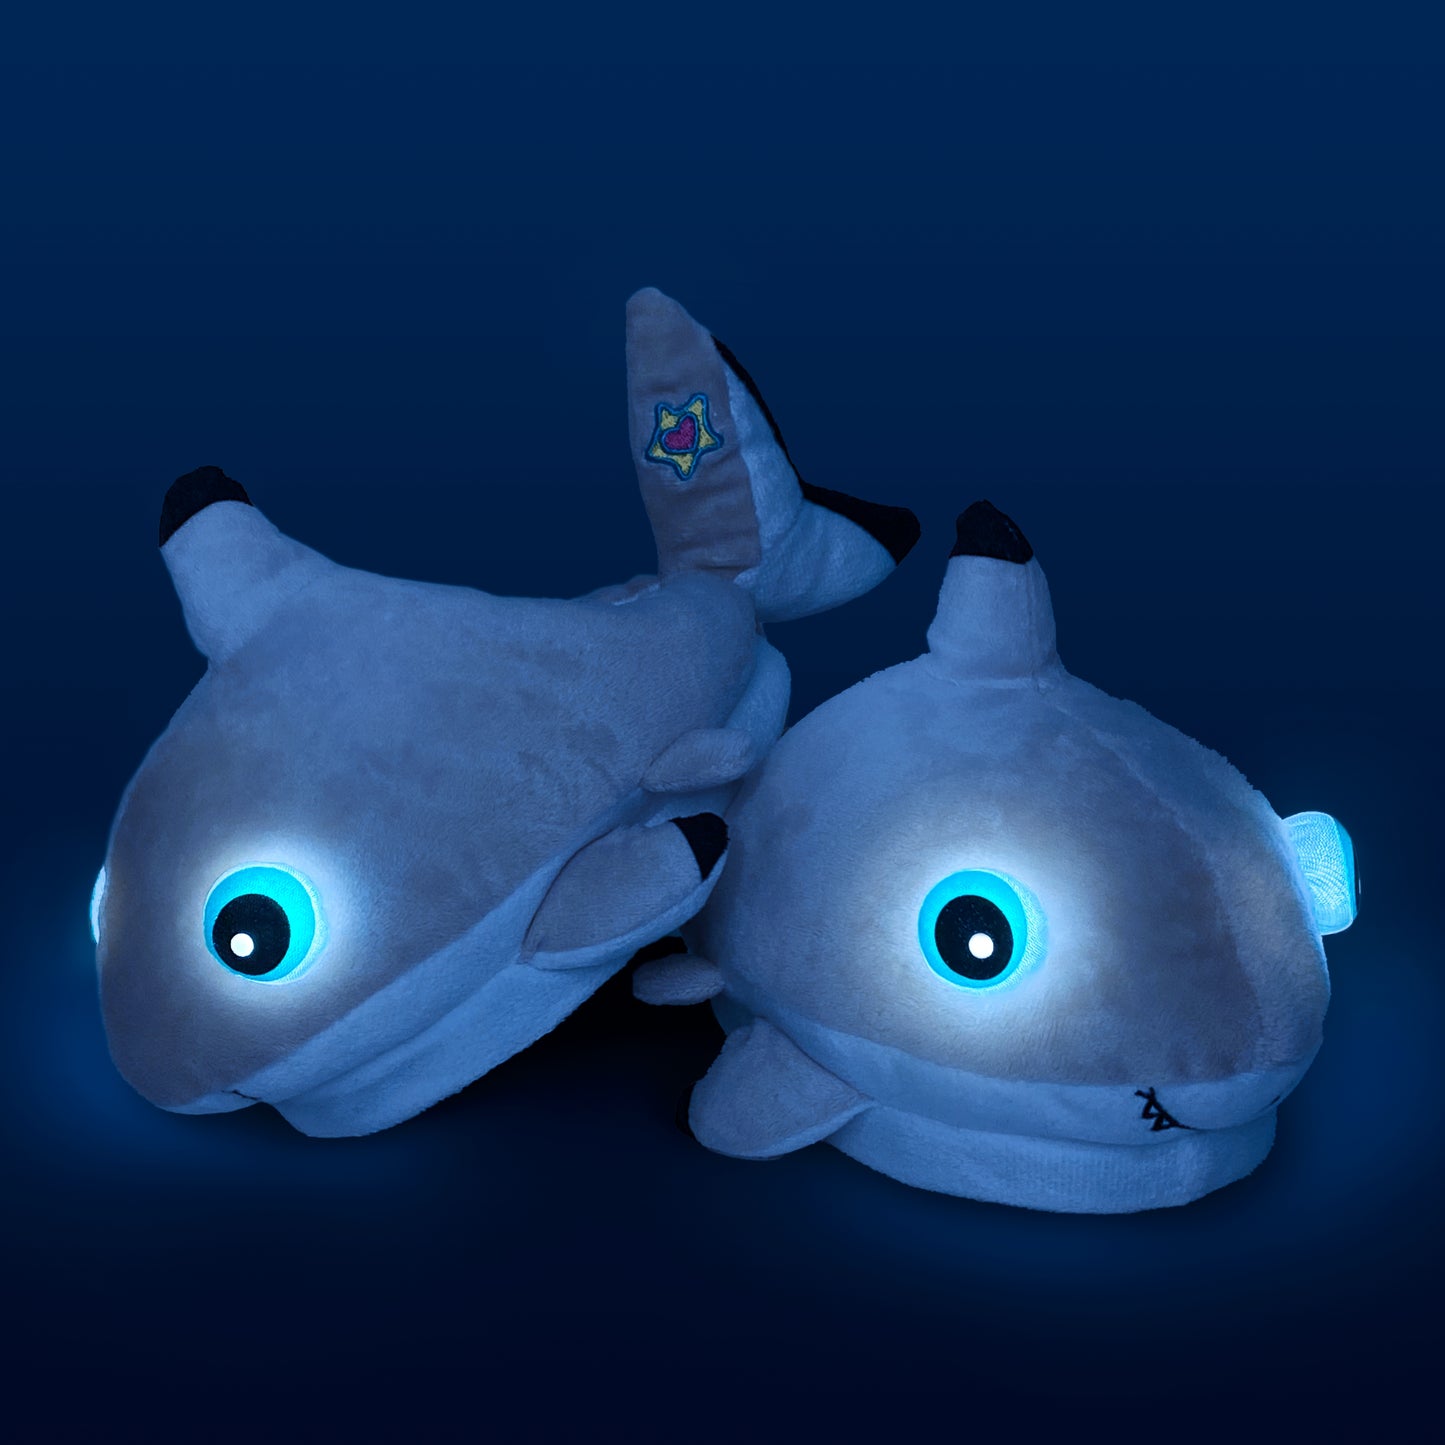 NightBuddies - Chaussons lumineux requin